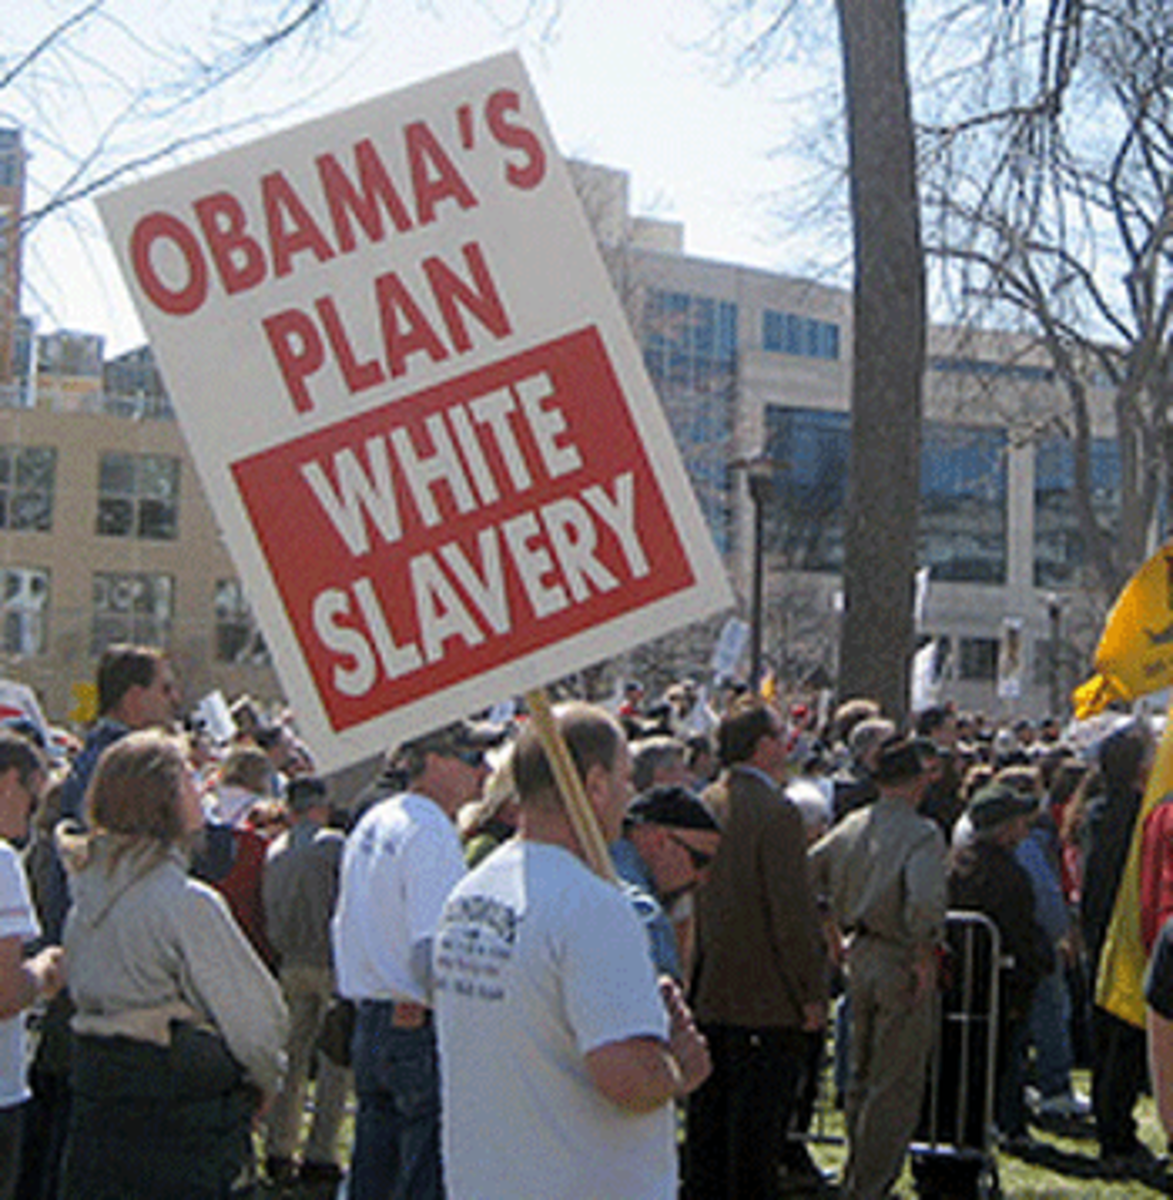 obama's plan white slavery